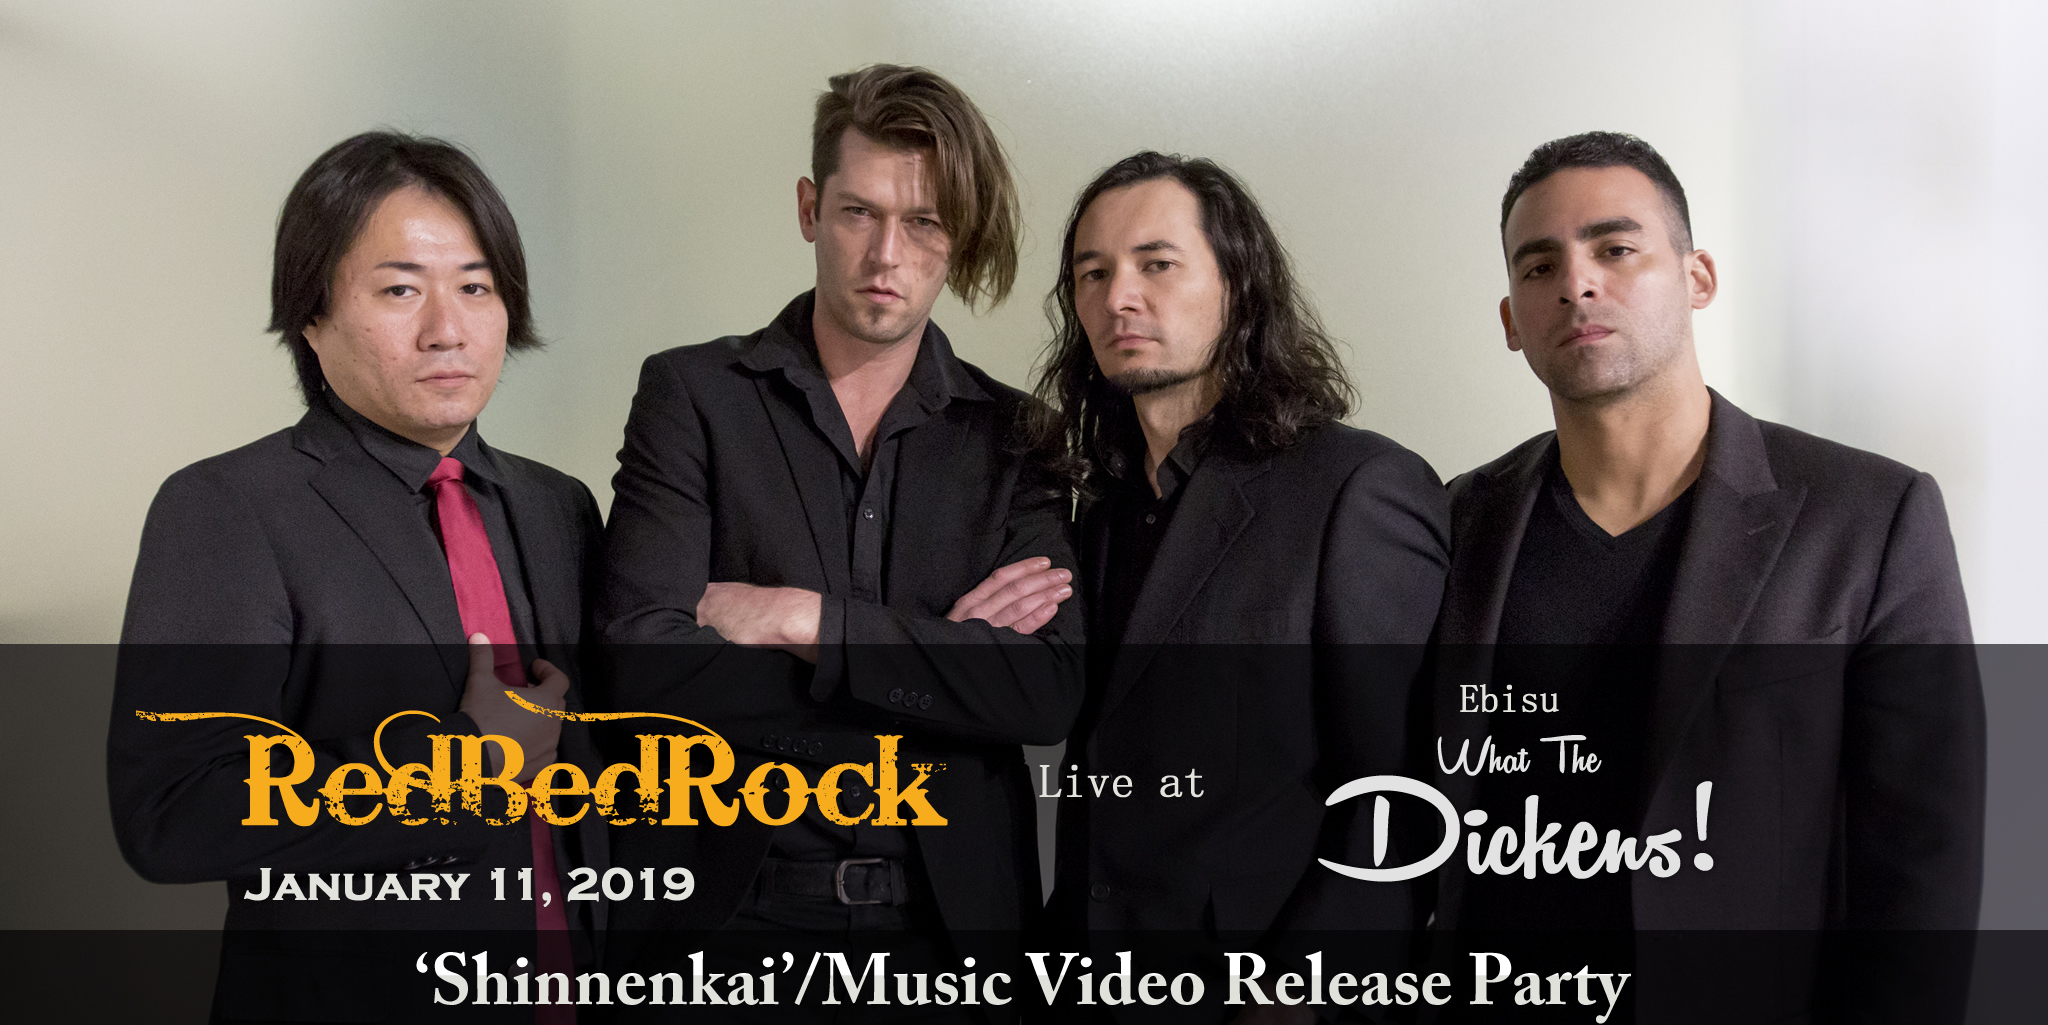 RedBedRock ‘Shinnenkai’/Music Video Release Party